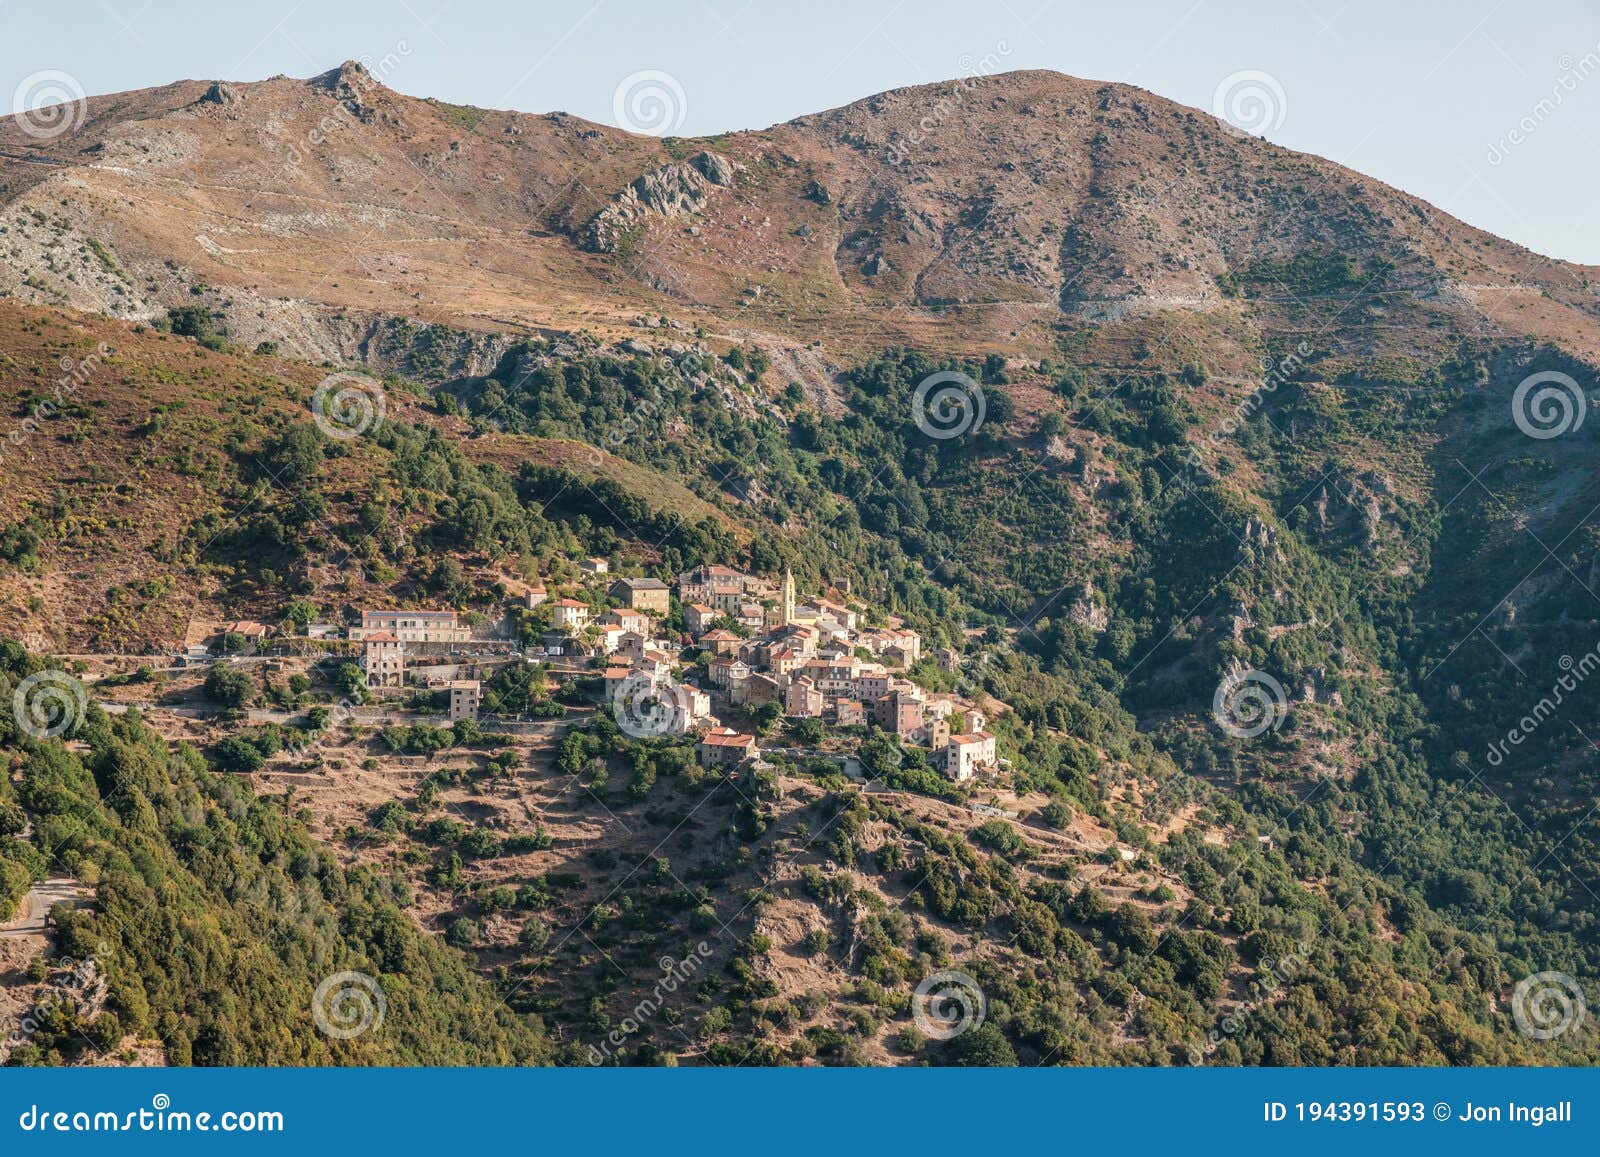 village of lento in corsica